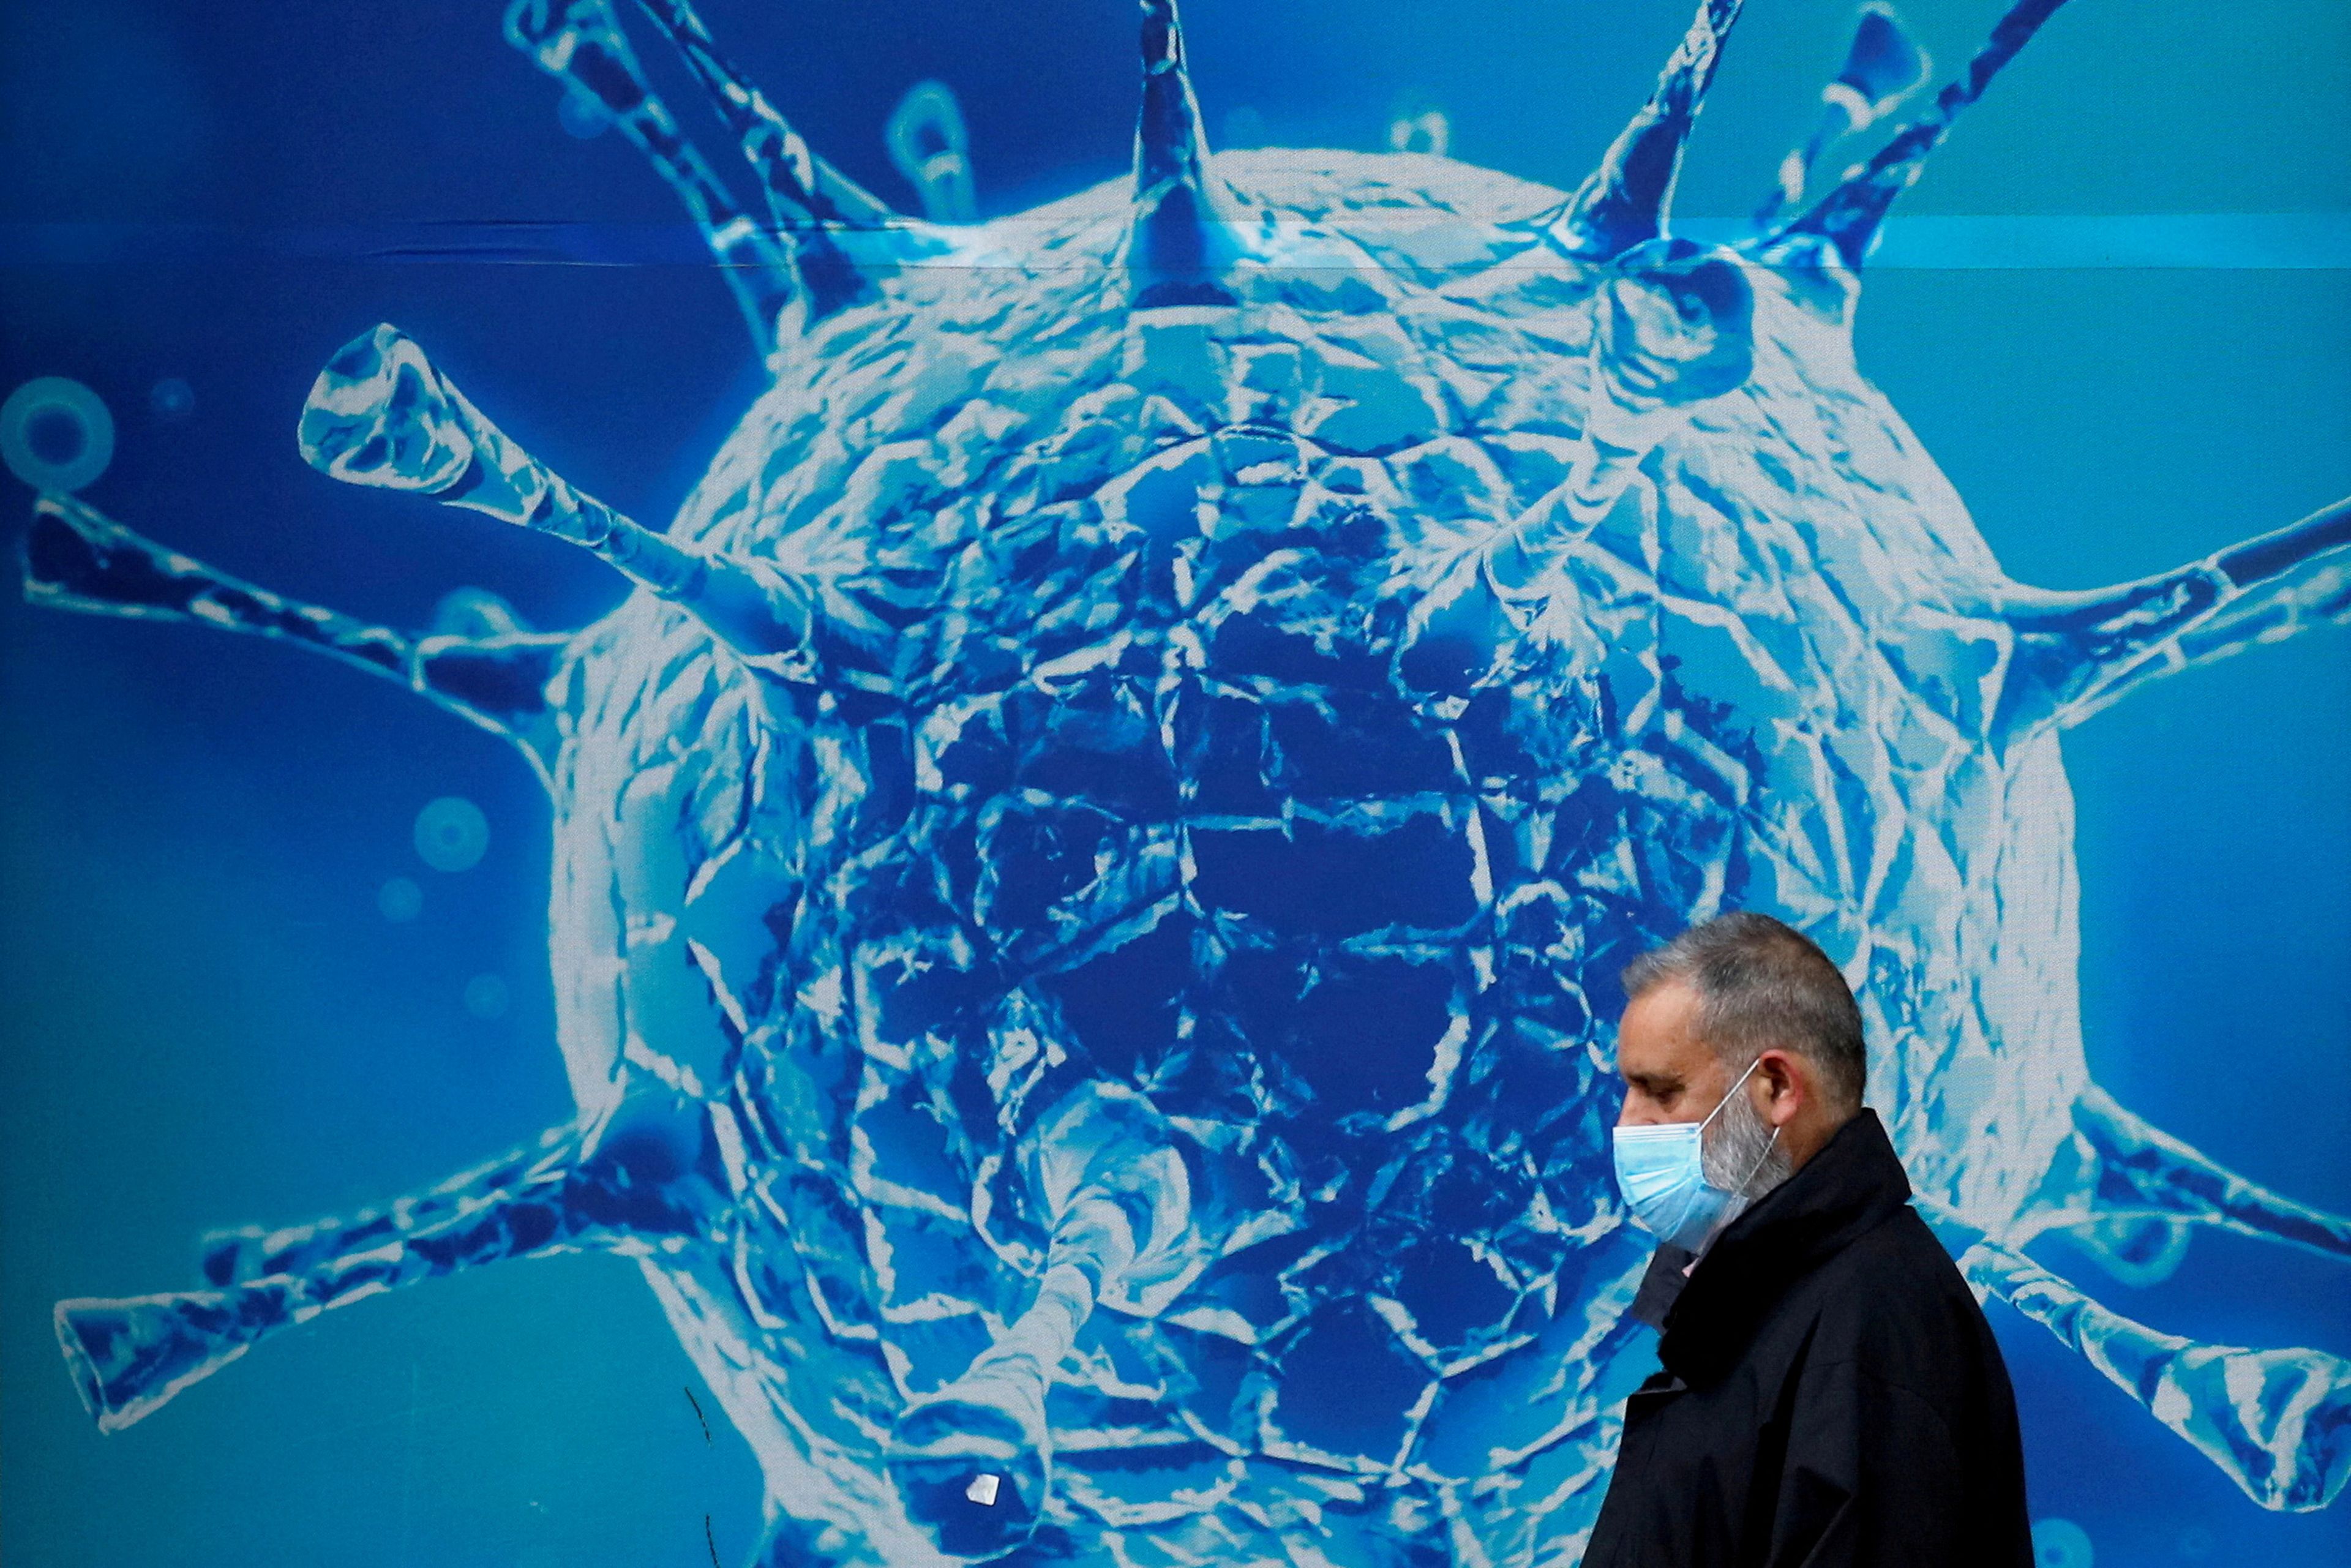 Hombre con mascarilla pasa delante de imagen de virus, en pandemia por covid-19